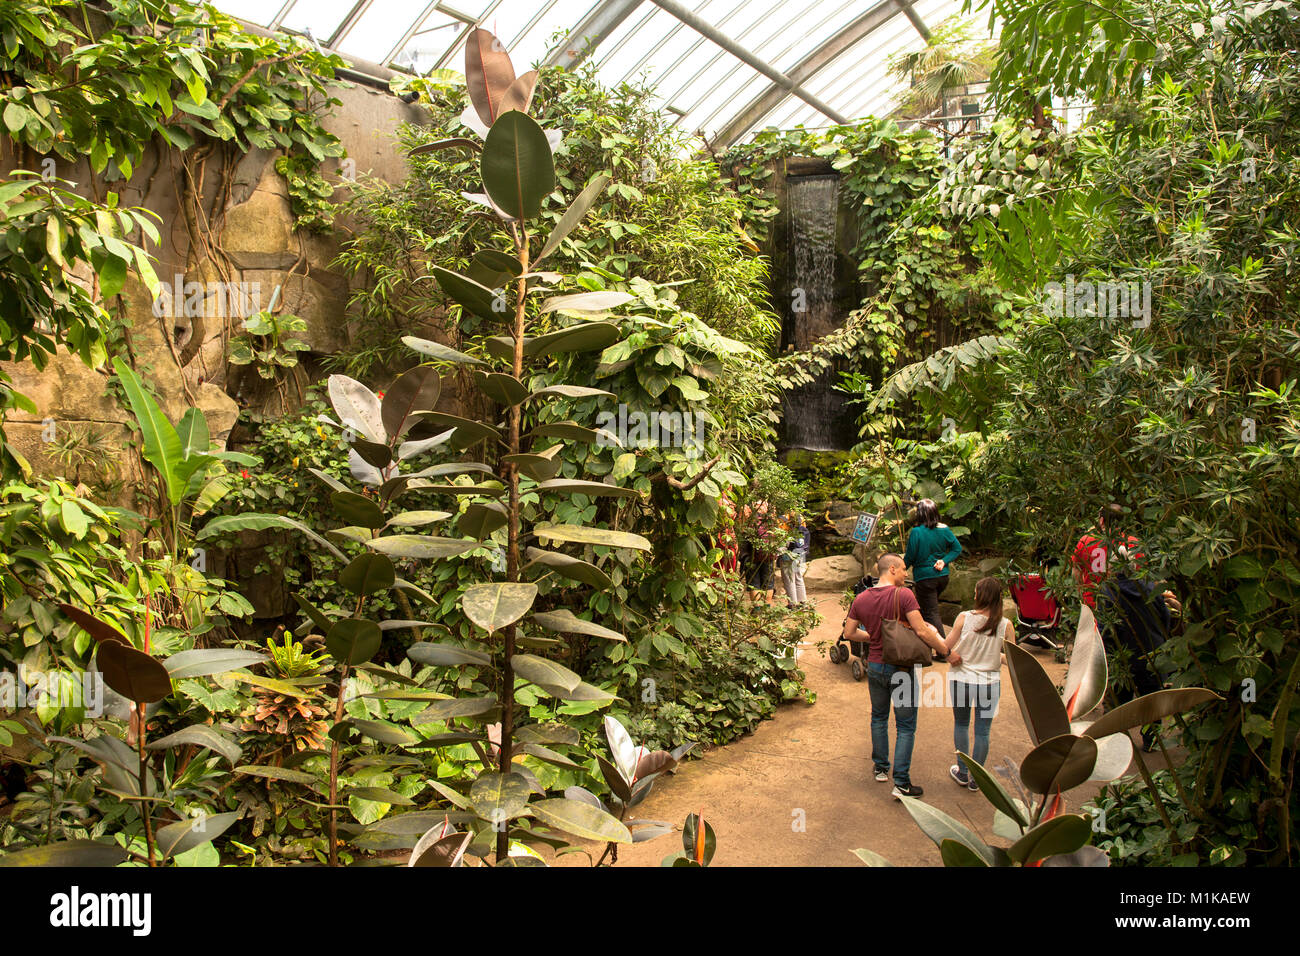 Germania, Colonia, la casa tropicale allo zoo. Deutschland, Koeln, das Tropenhaus im Zoo. Foto Stock